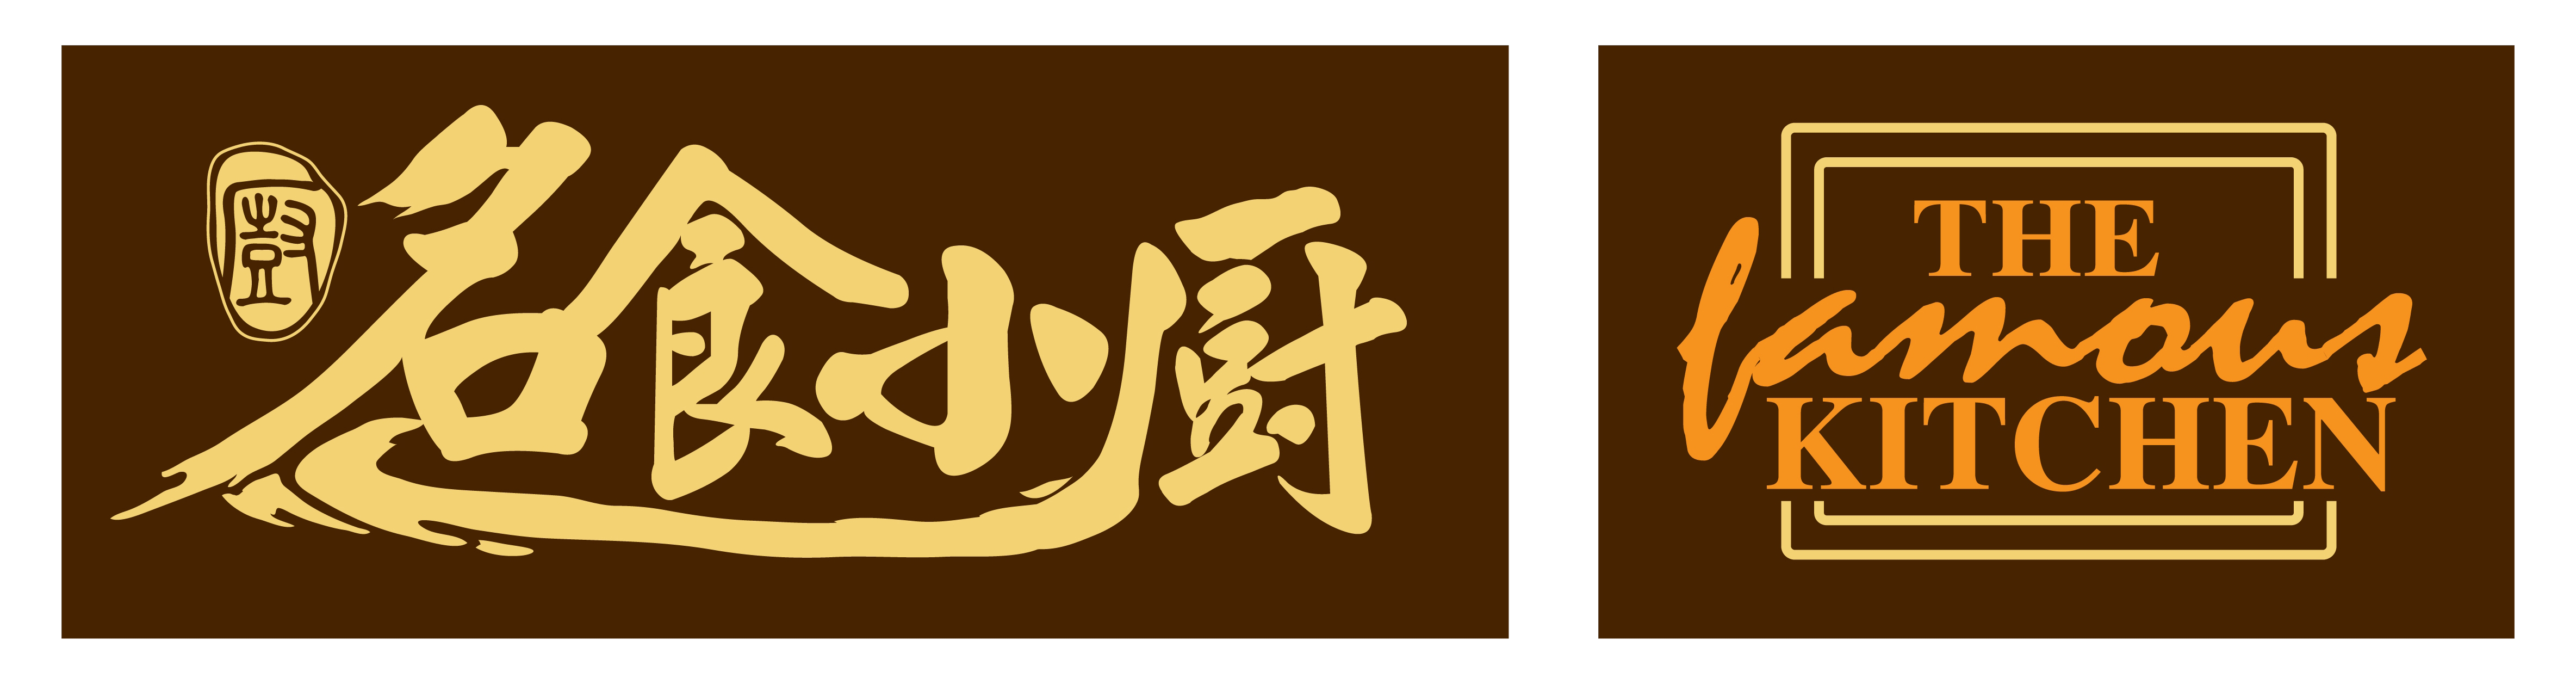 Famous Kitchen Logo (3) (7)